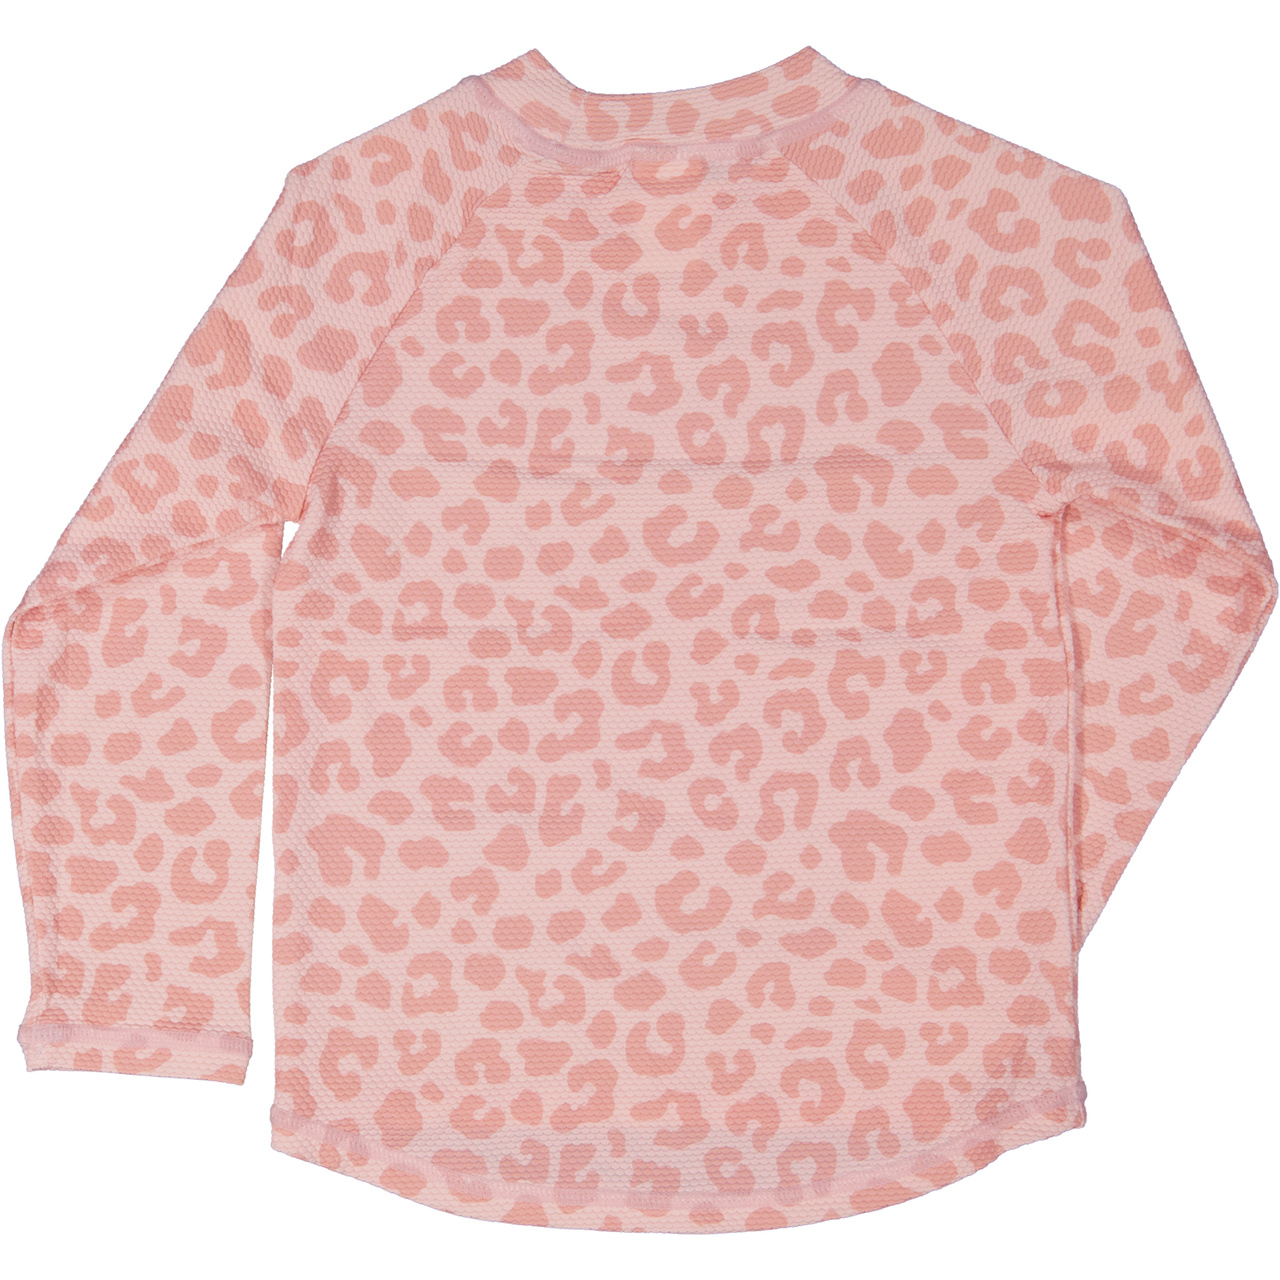 UV-L.S sweater vaaleanpunainen Leo  86/92